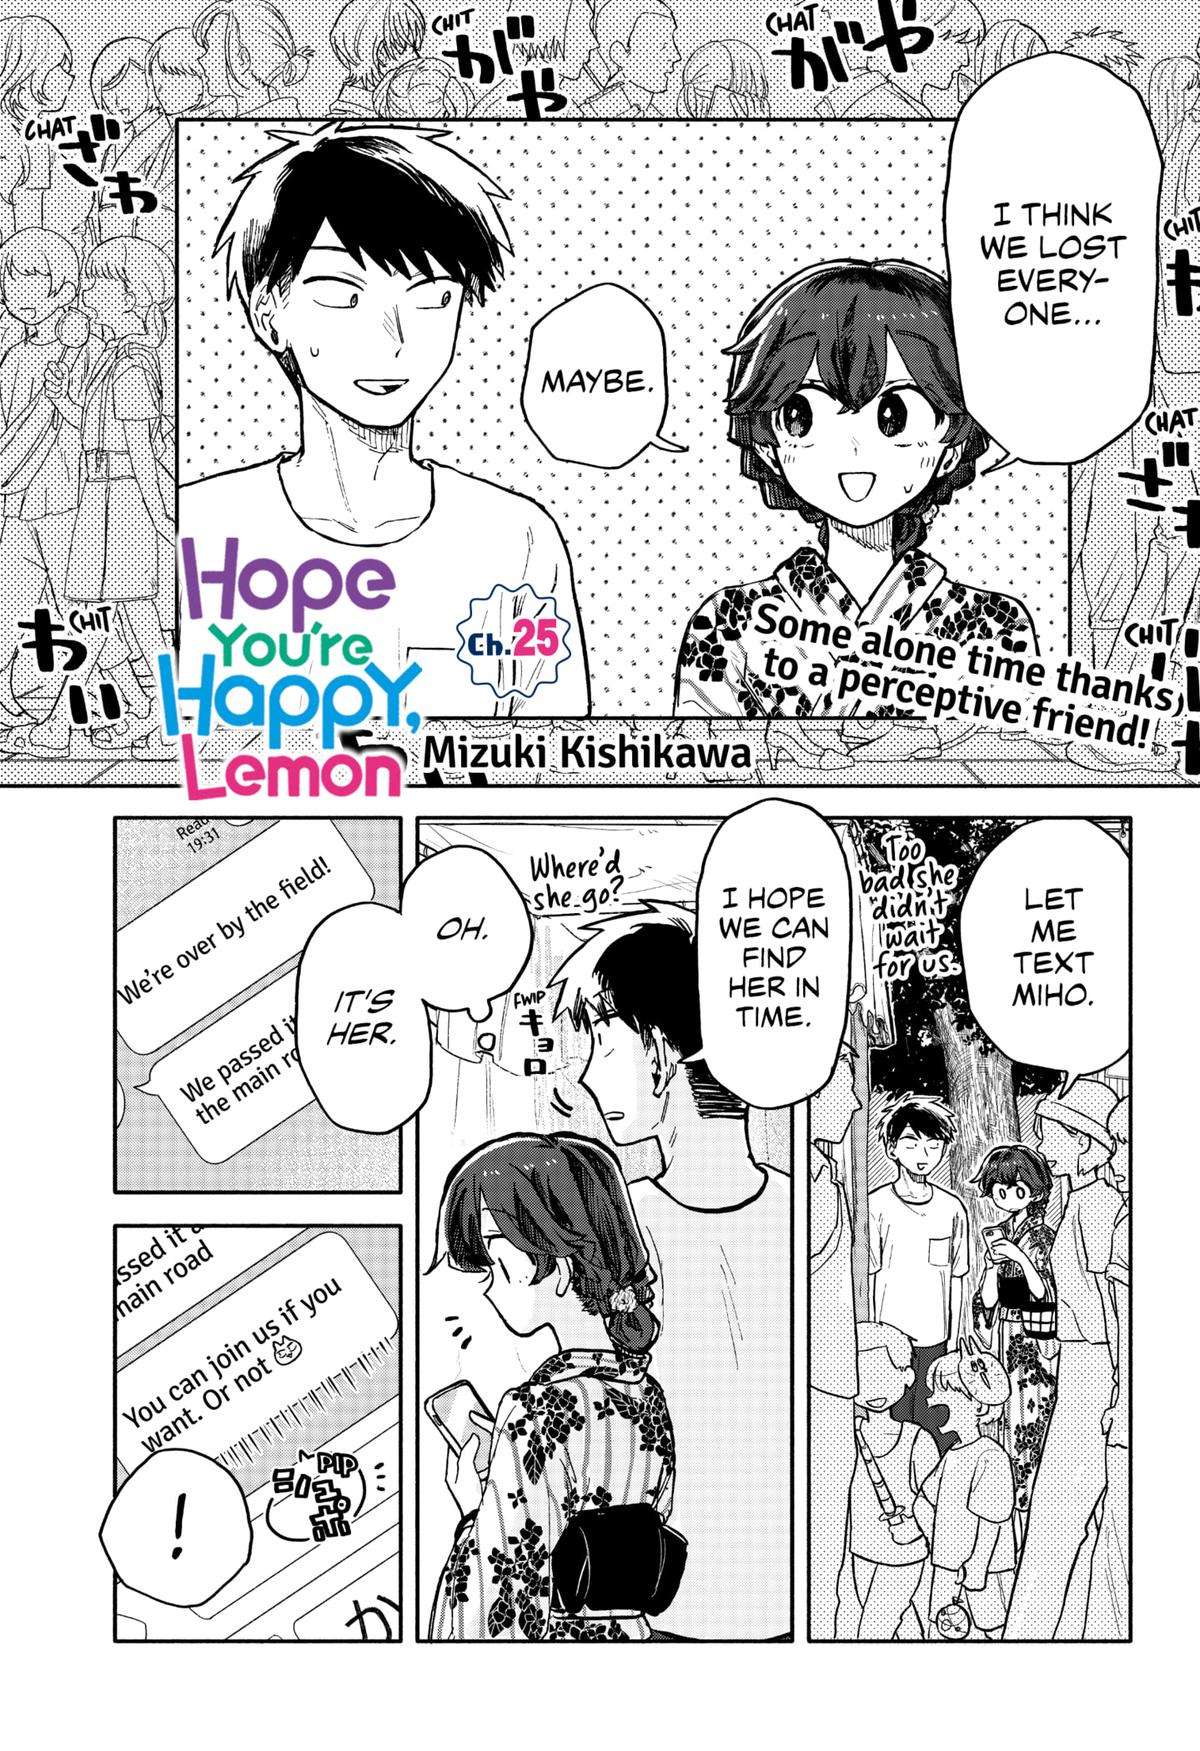 Hope You're Happy, Lemon - chapter 25 - #1